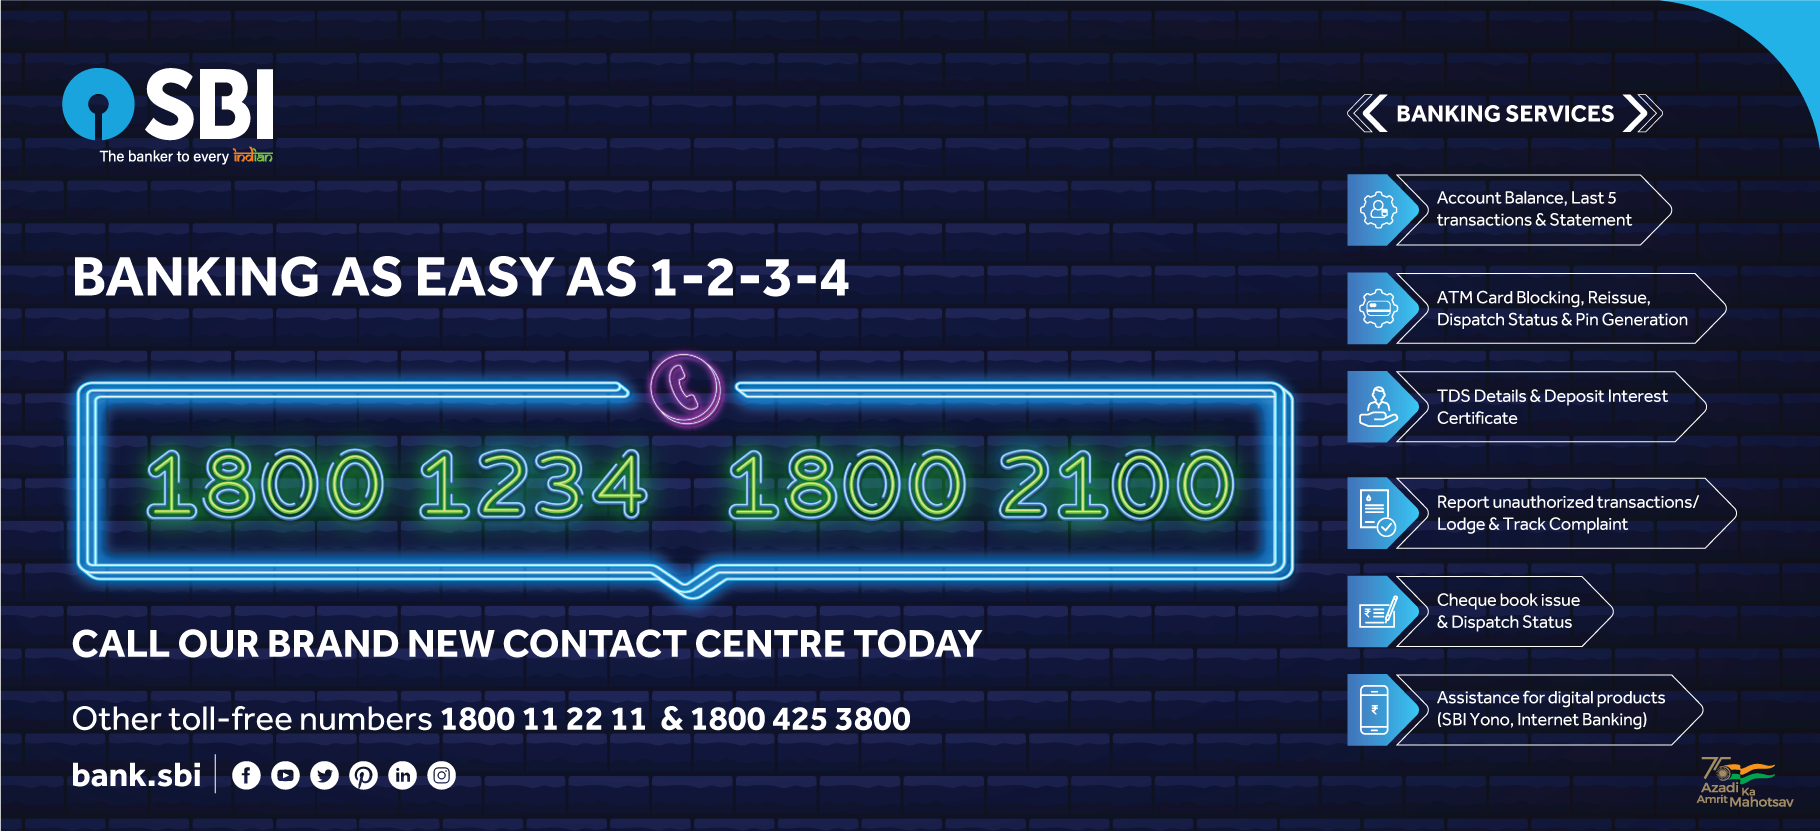 Contact Centre